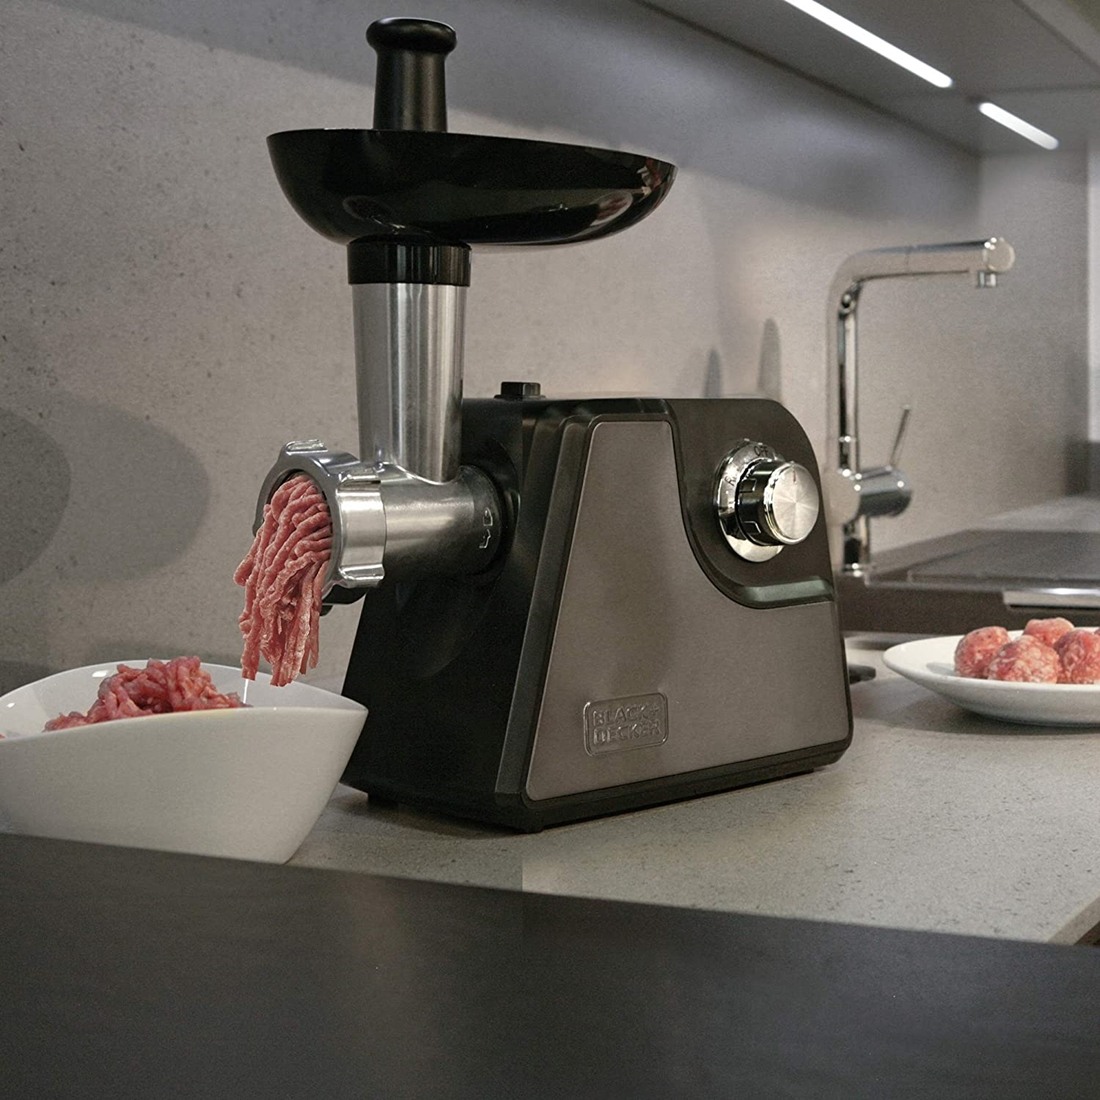 Masina de tocat carne 2 trepte viteza Black+Decker 1000 W Black + Decker Appliances imagine 2022 1-1.ro